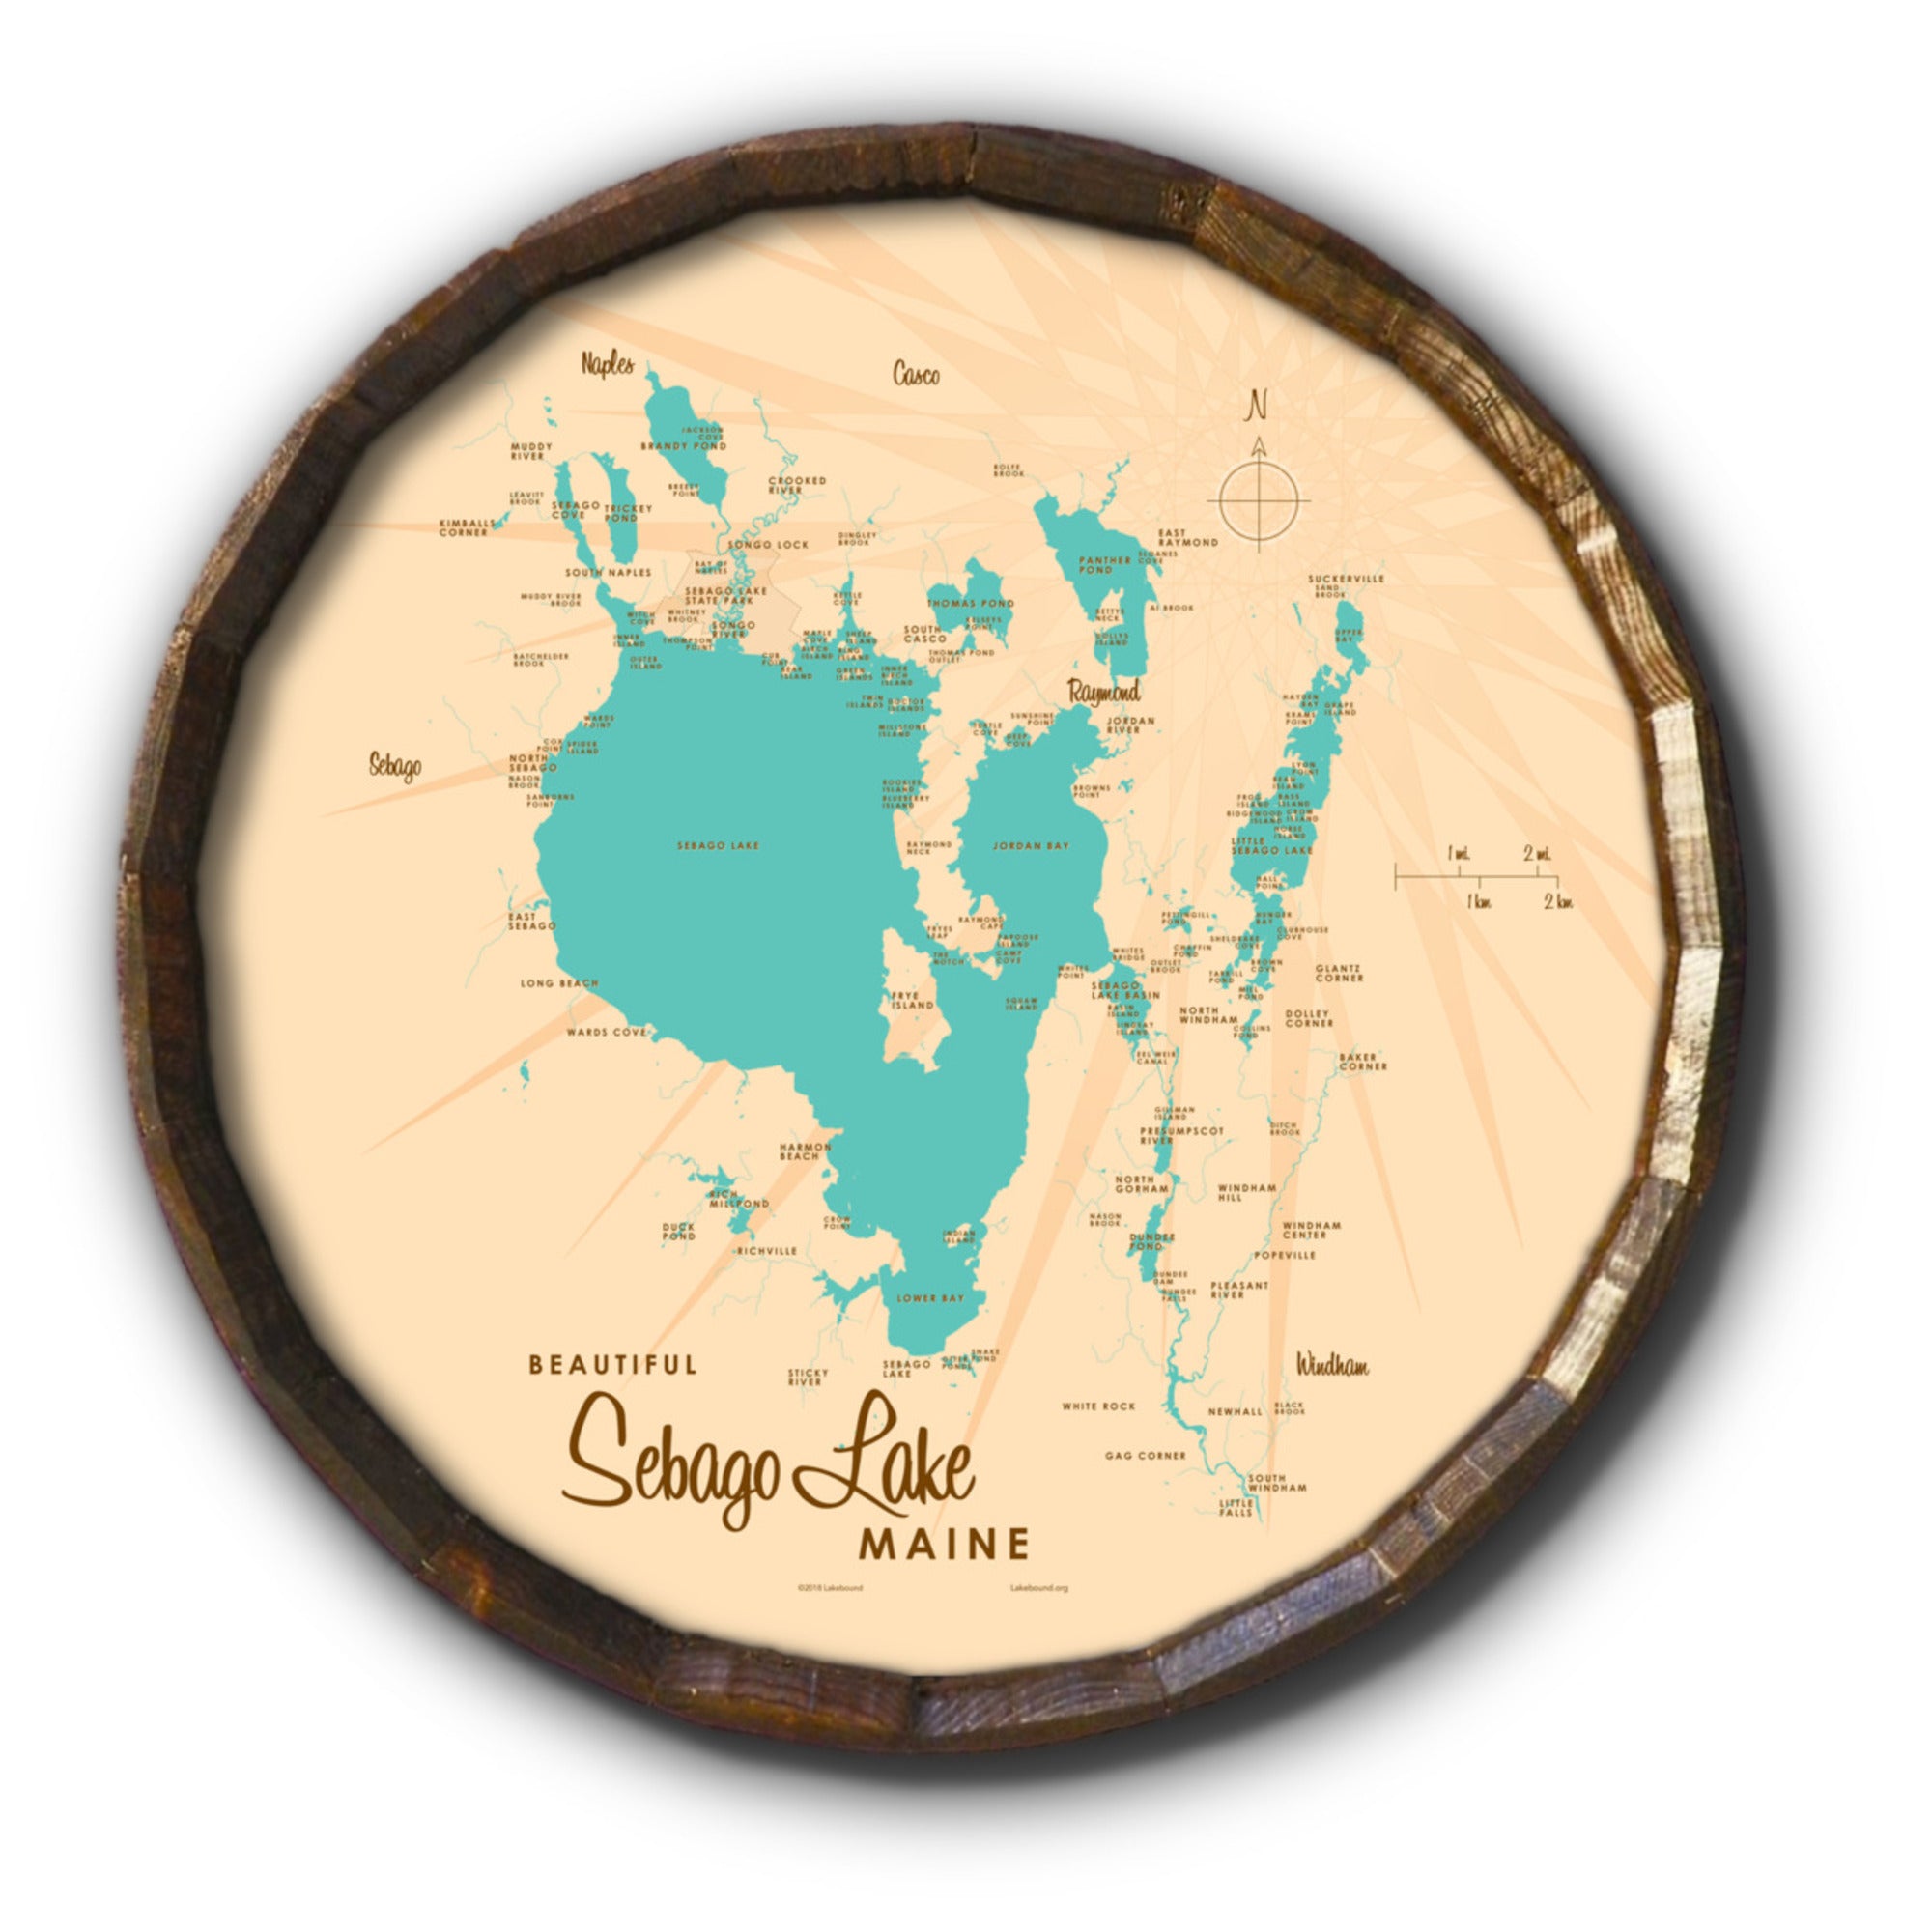 Sebago Lake Maine, Barrel End Map Art